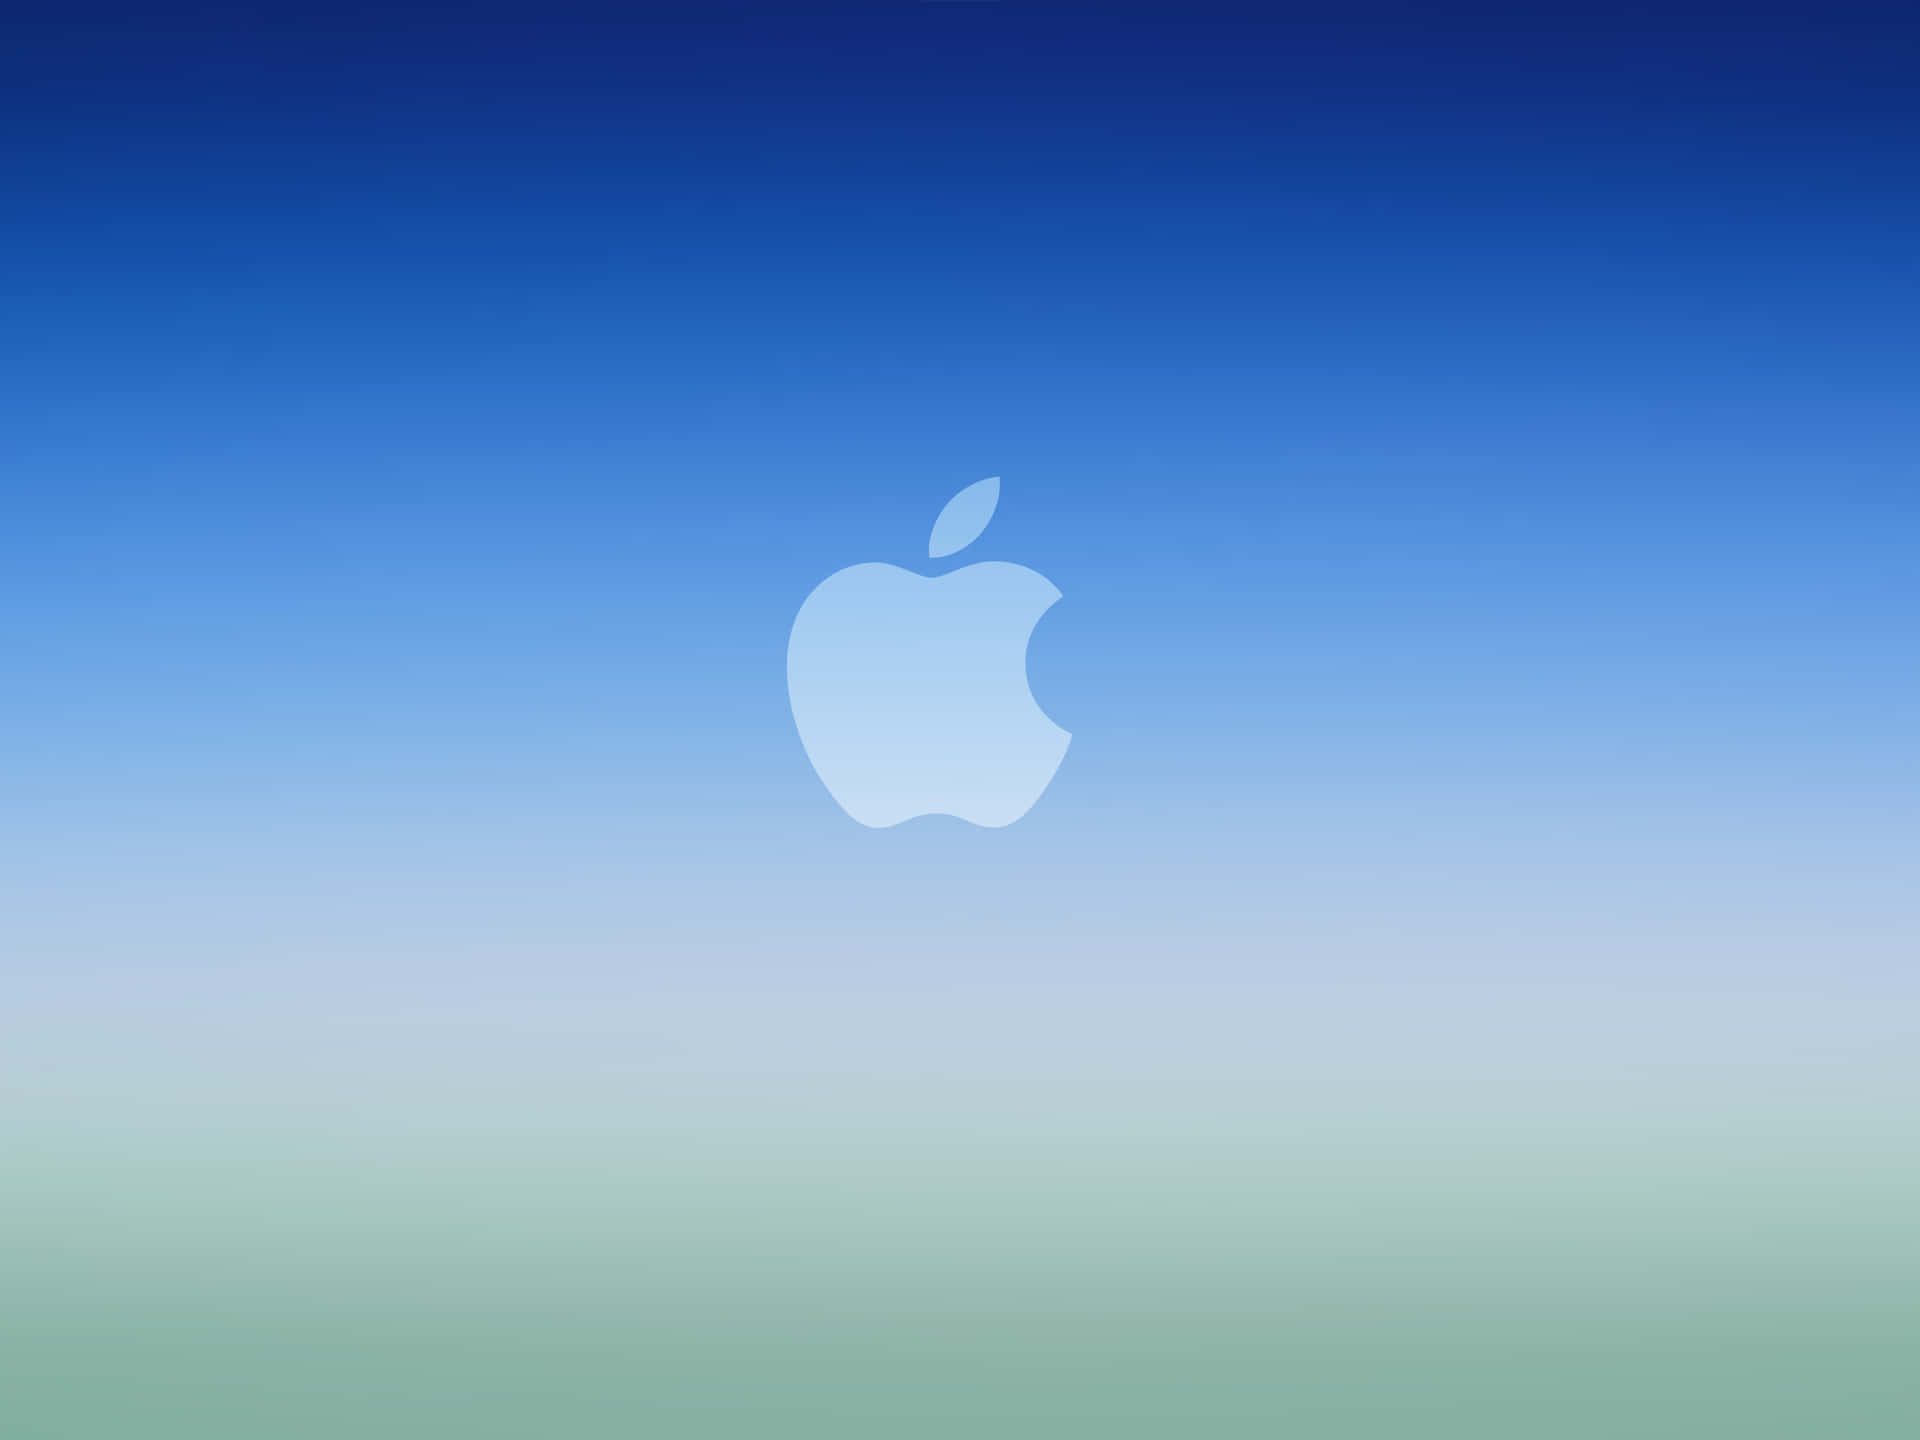 Apple Logo On A Blue Background Wallpaper